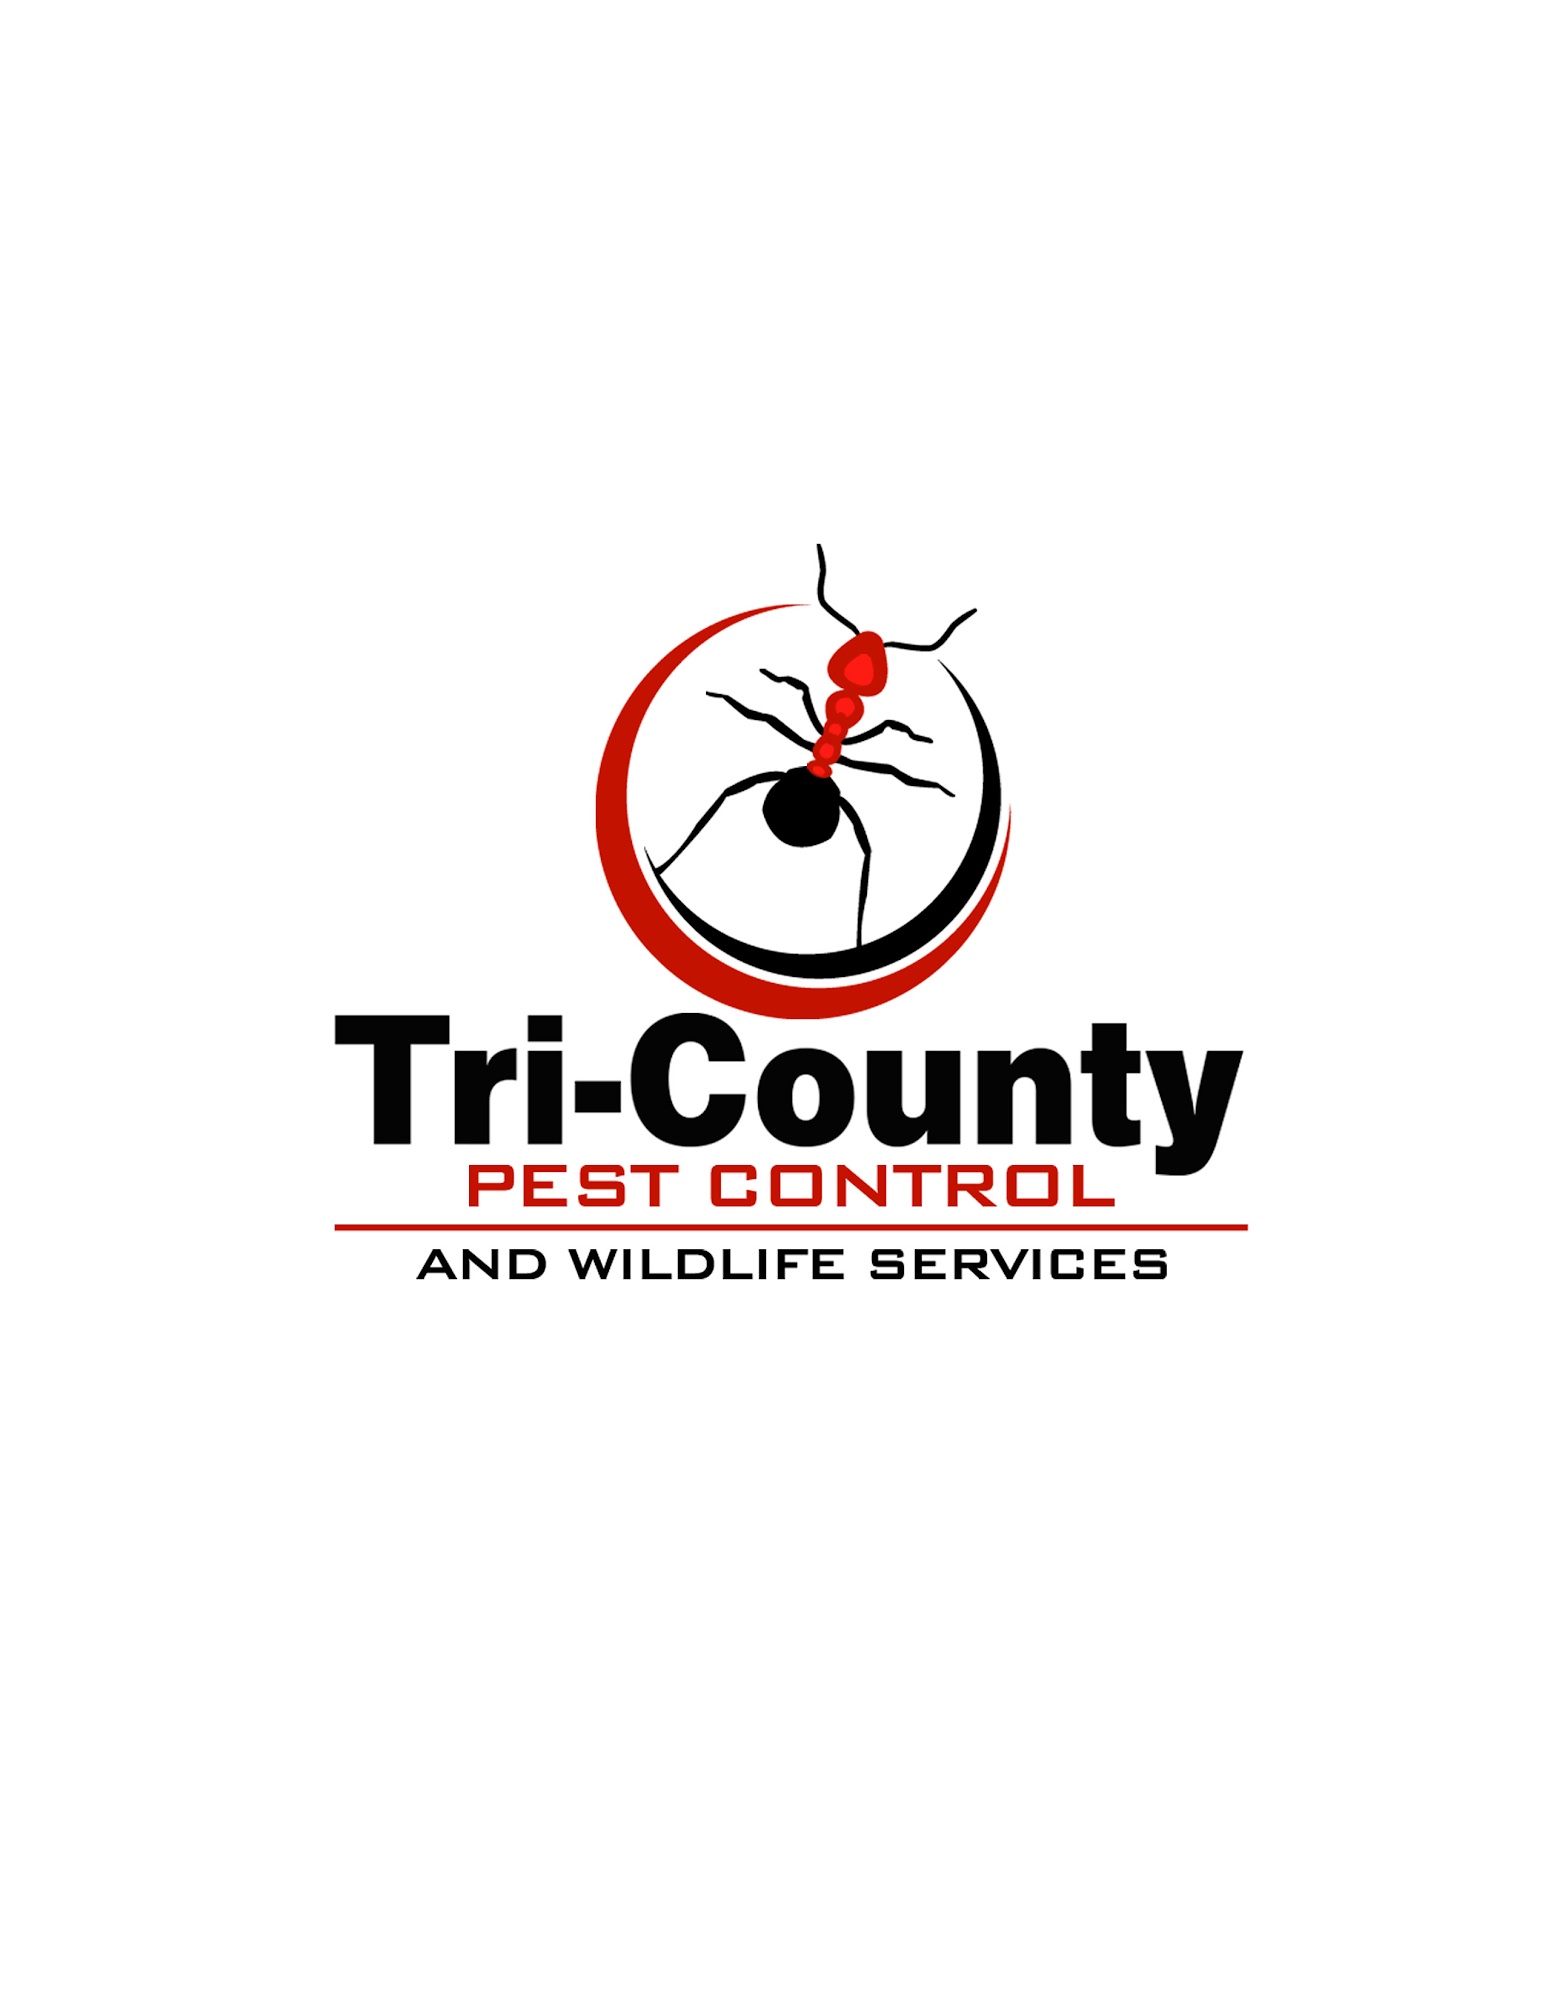 Tri-County Pest Control & Wildlife Services